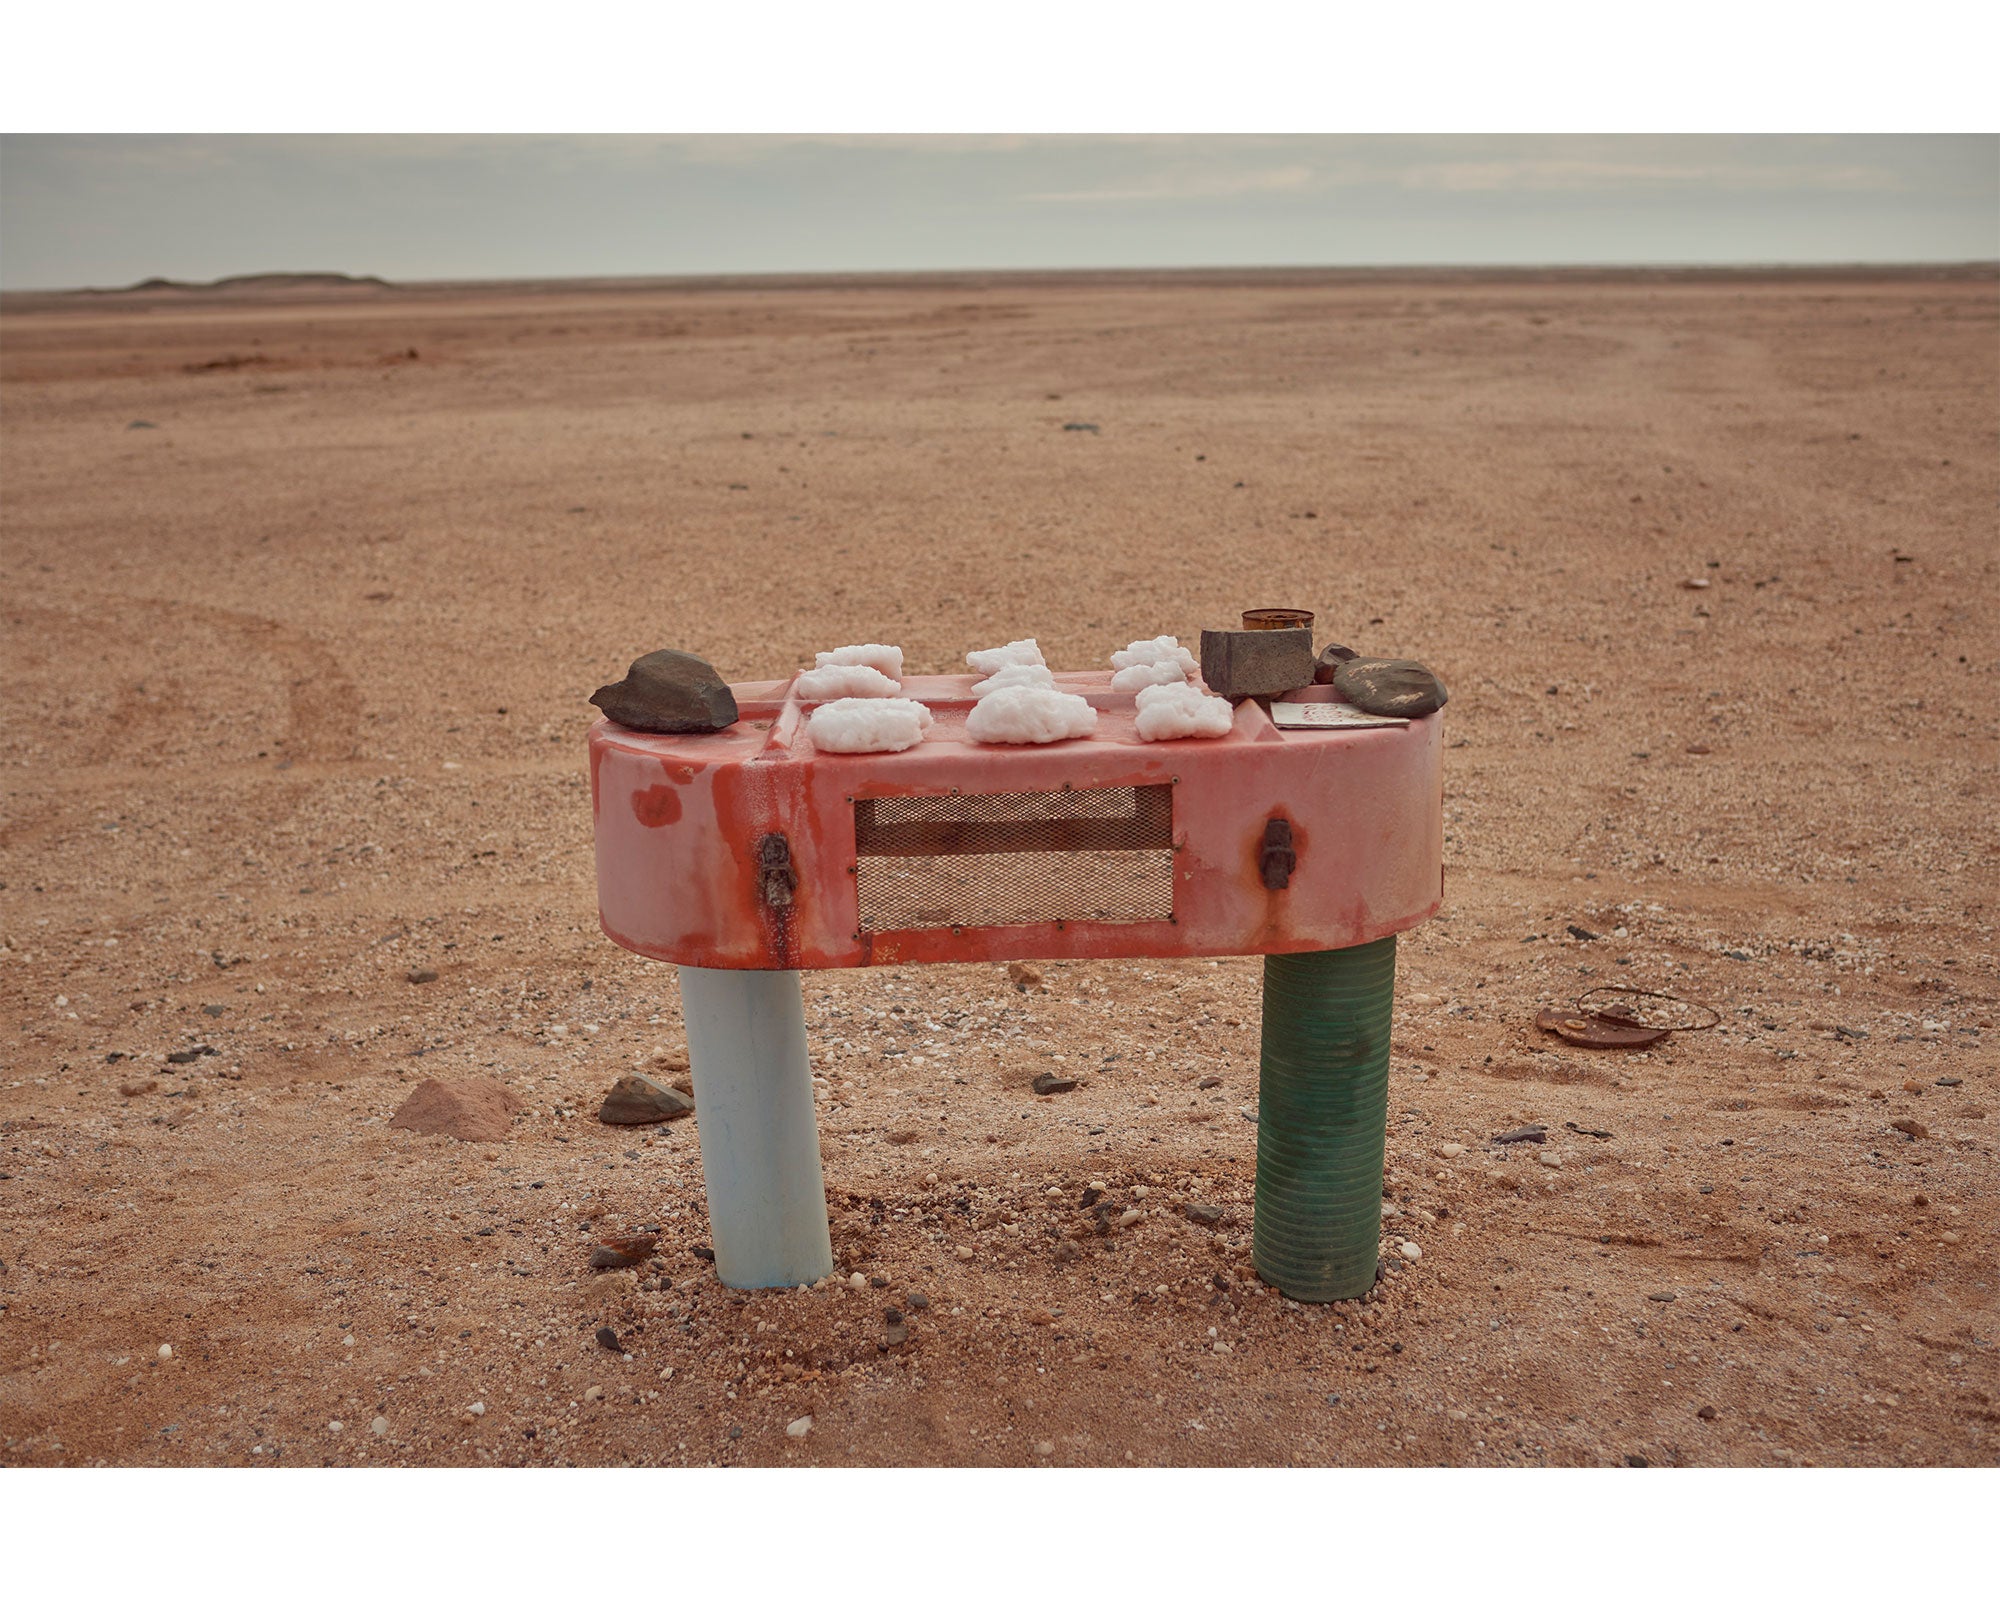 Josh Robenstone 'Road Side Salt' - Untitled 9